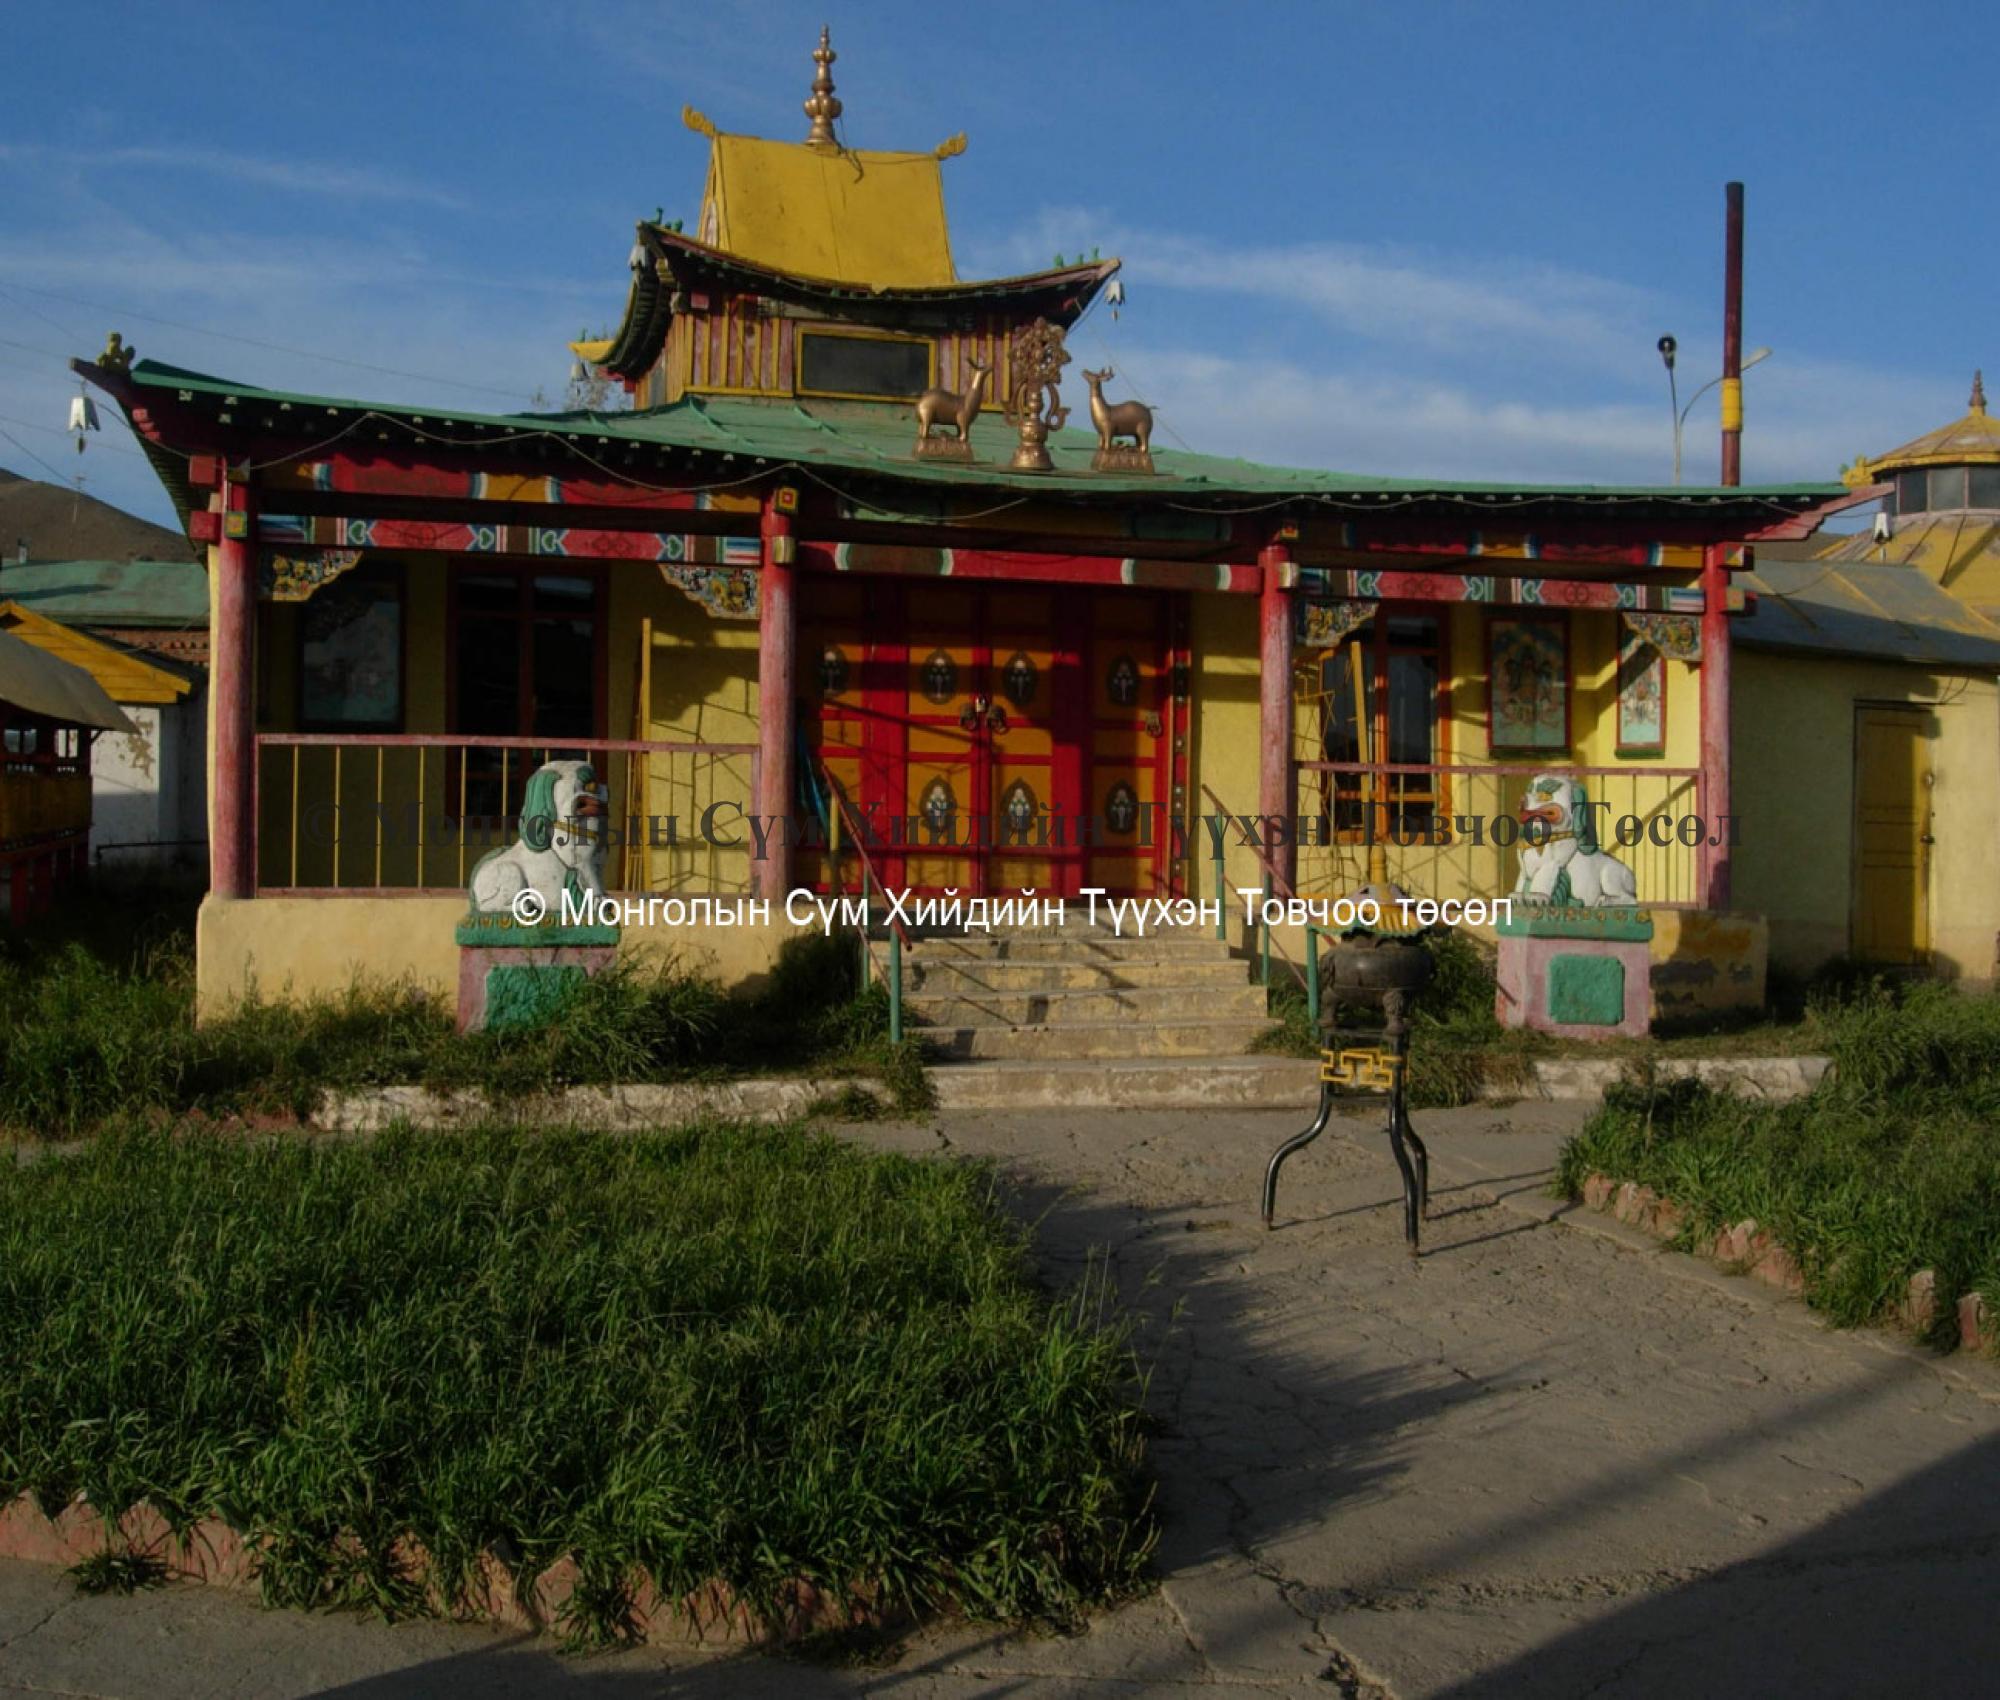 Main temple